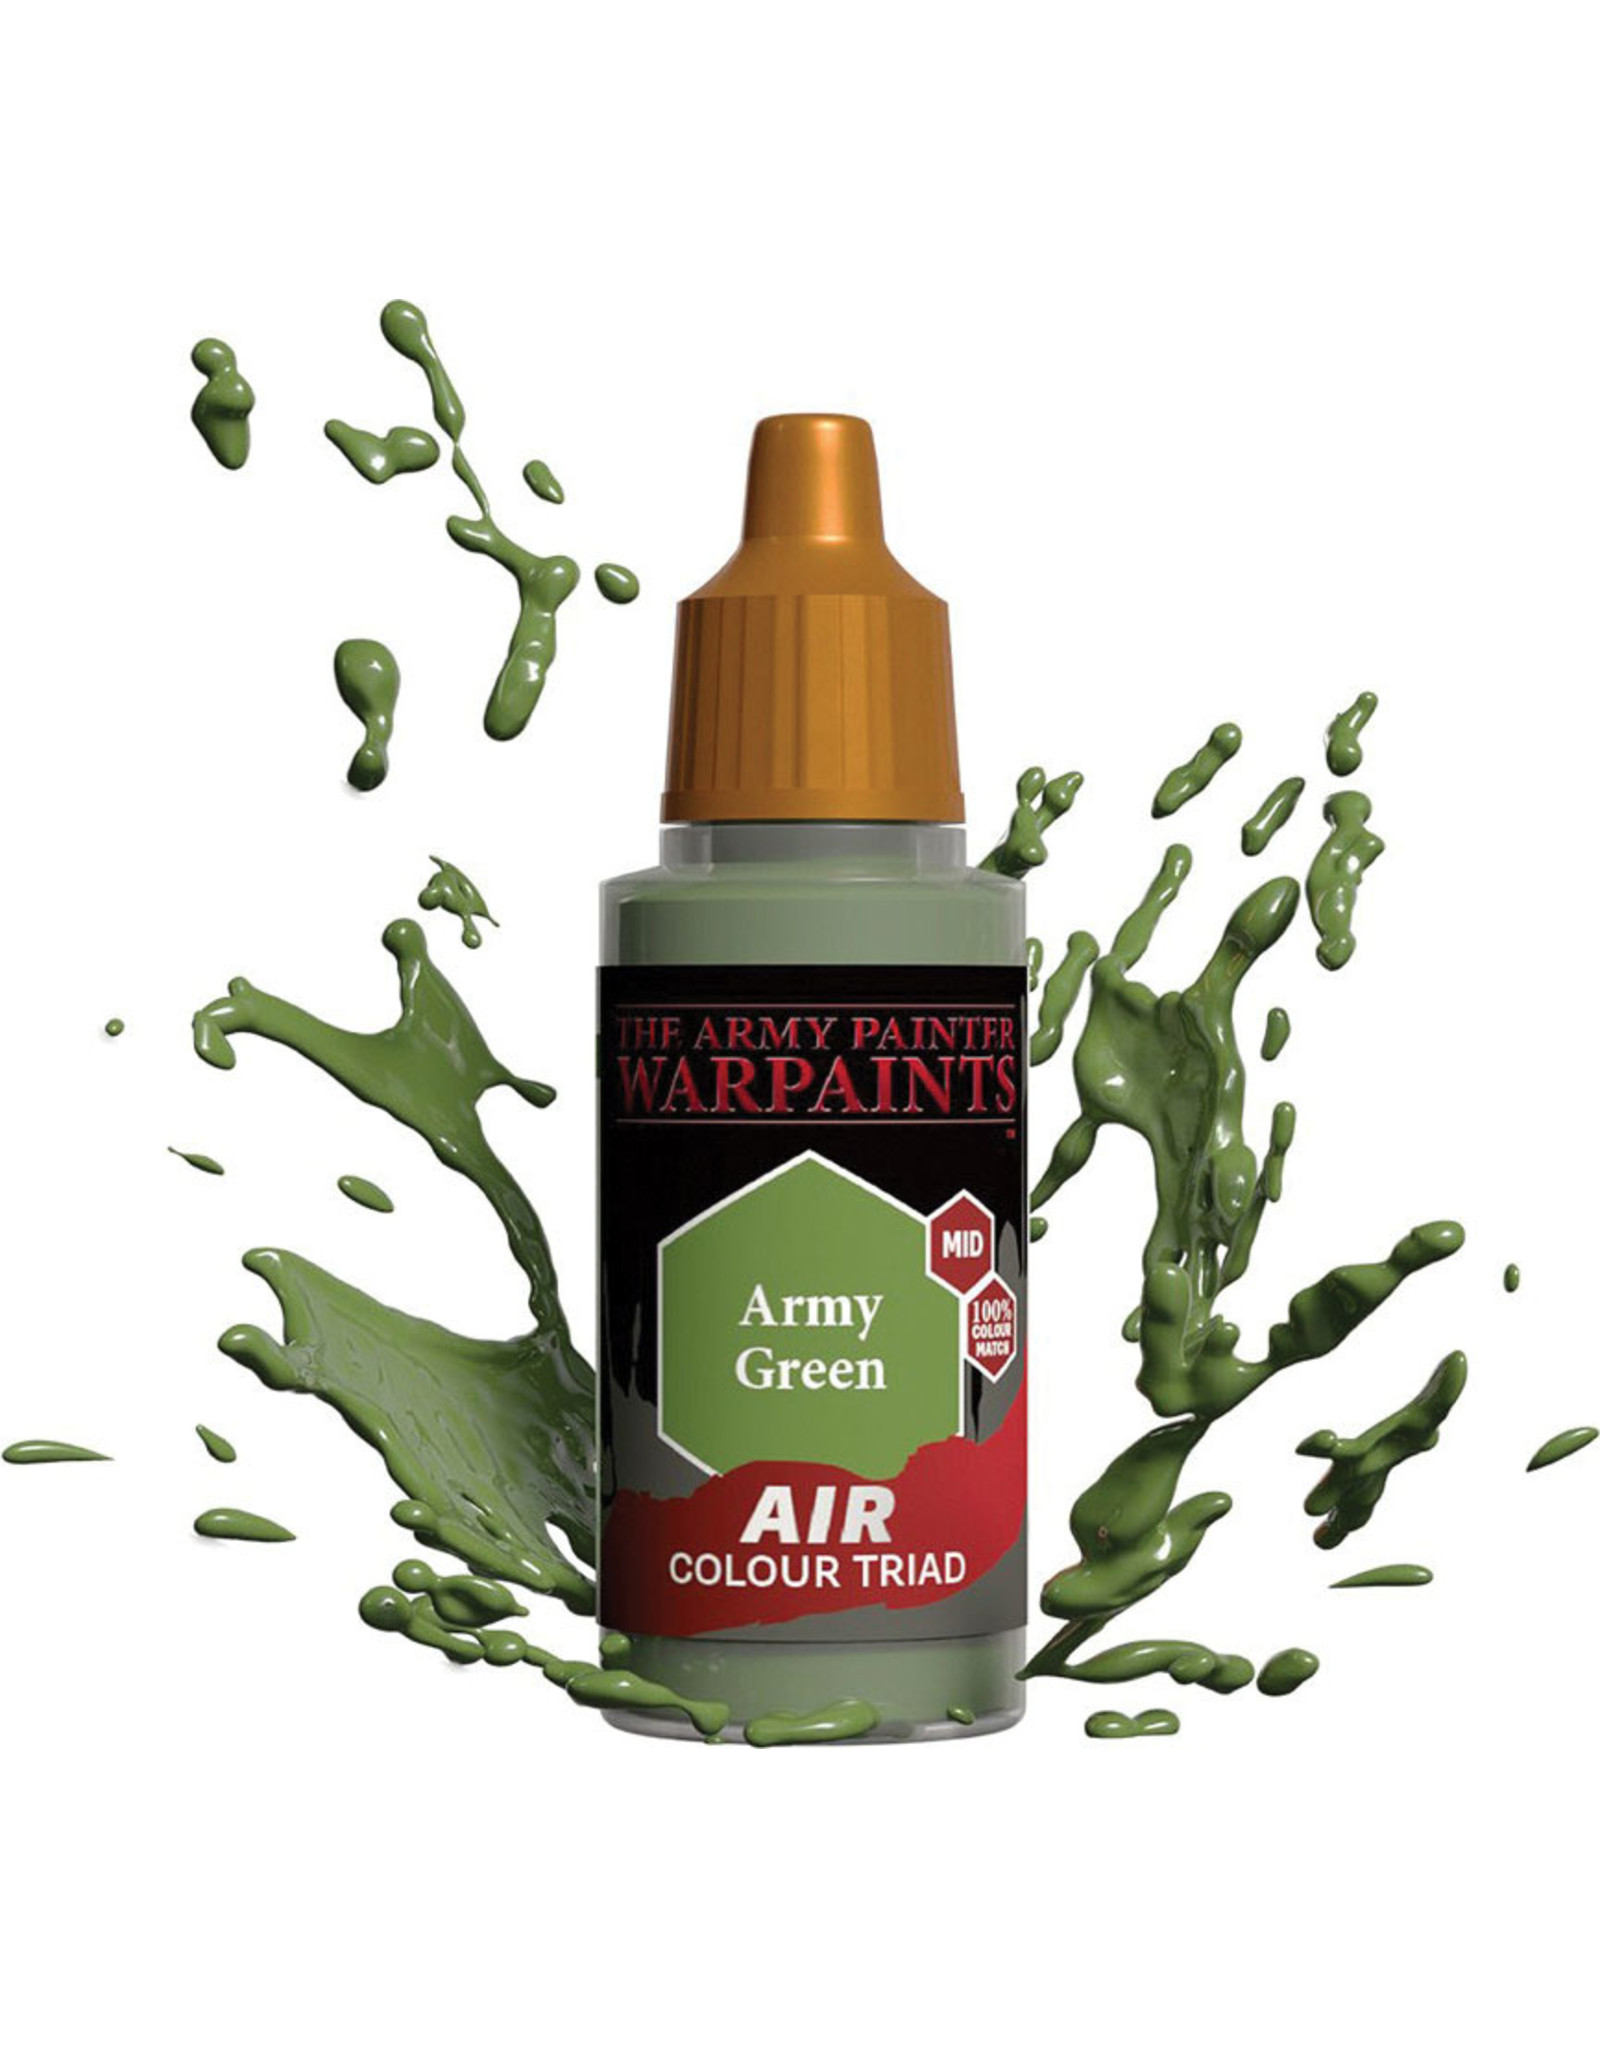 Army Painter Warpaint Air: Army Green, 18ml.